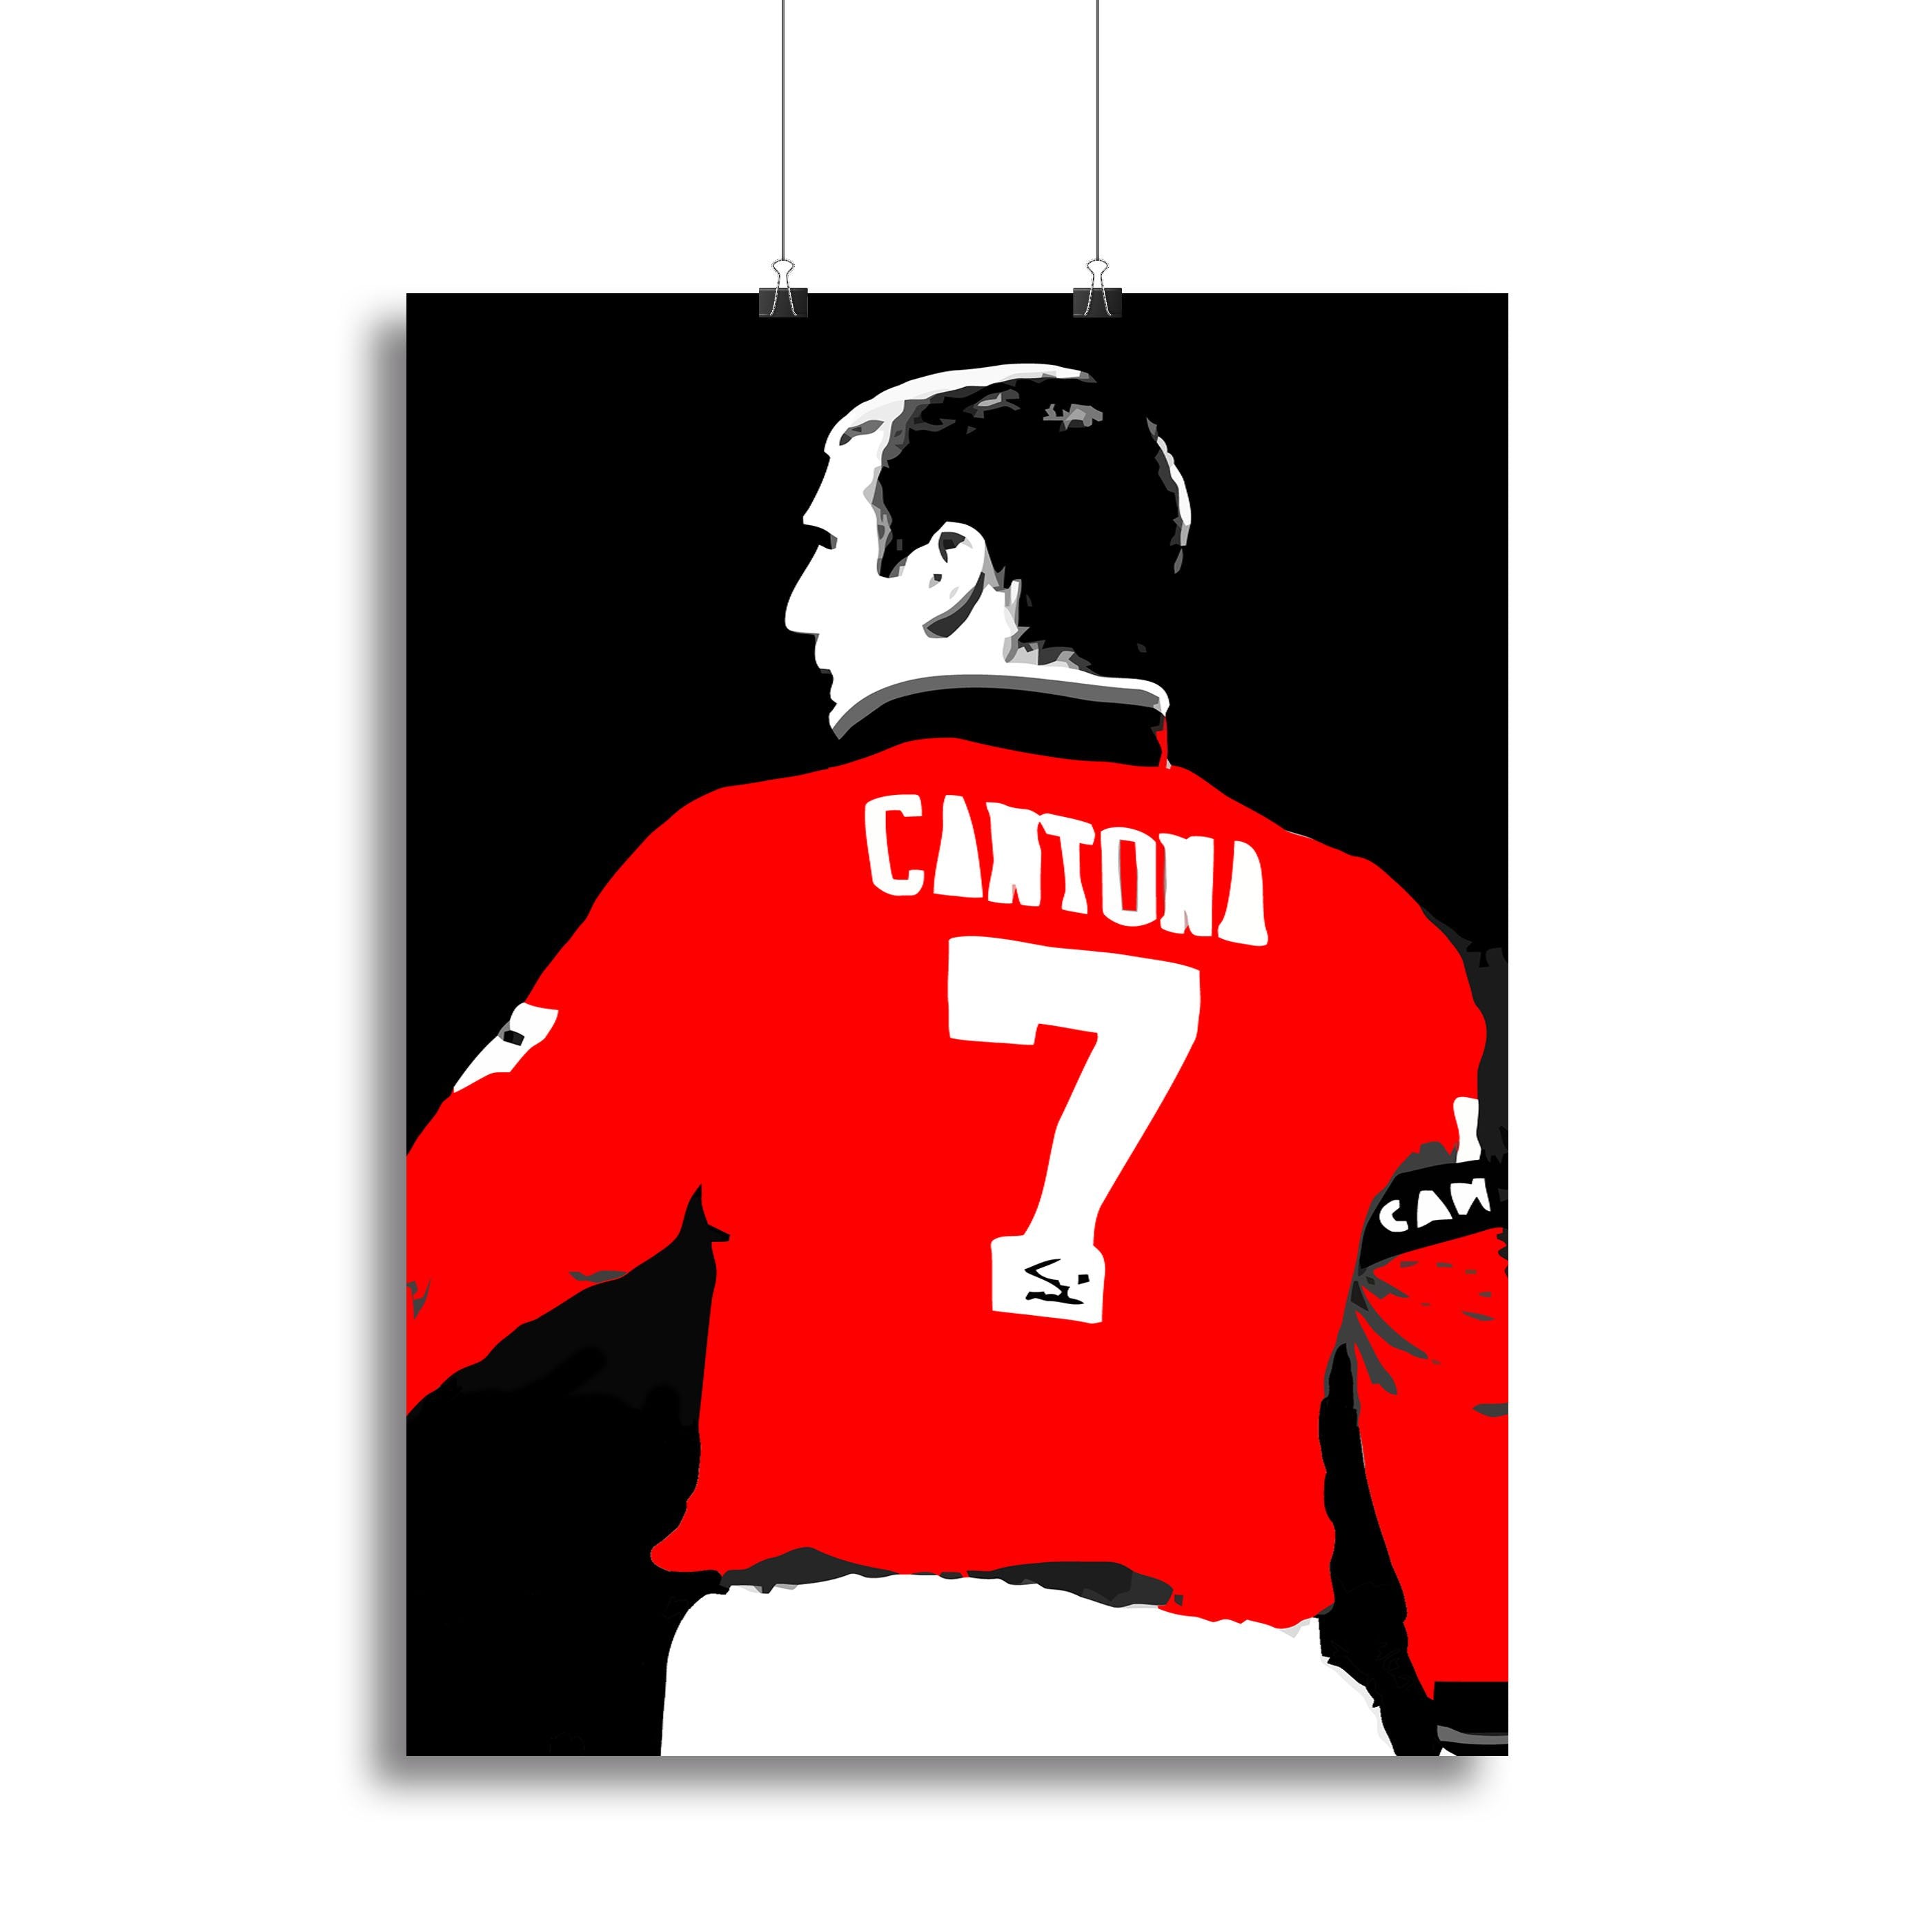 Eric Cantona No 7 Canvas Print or Poster